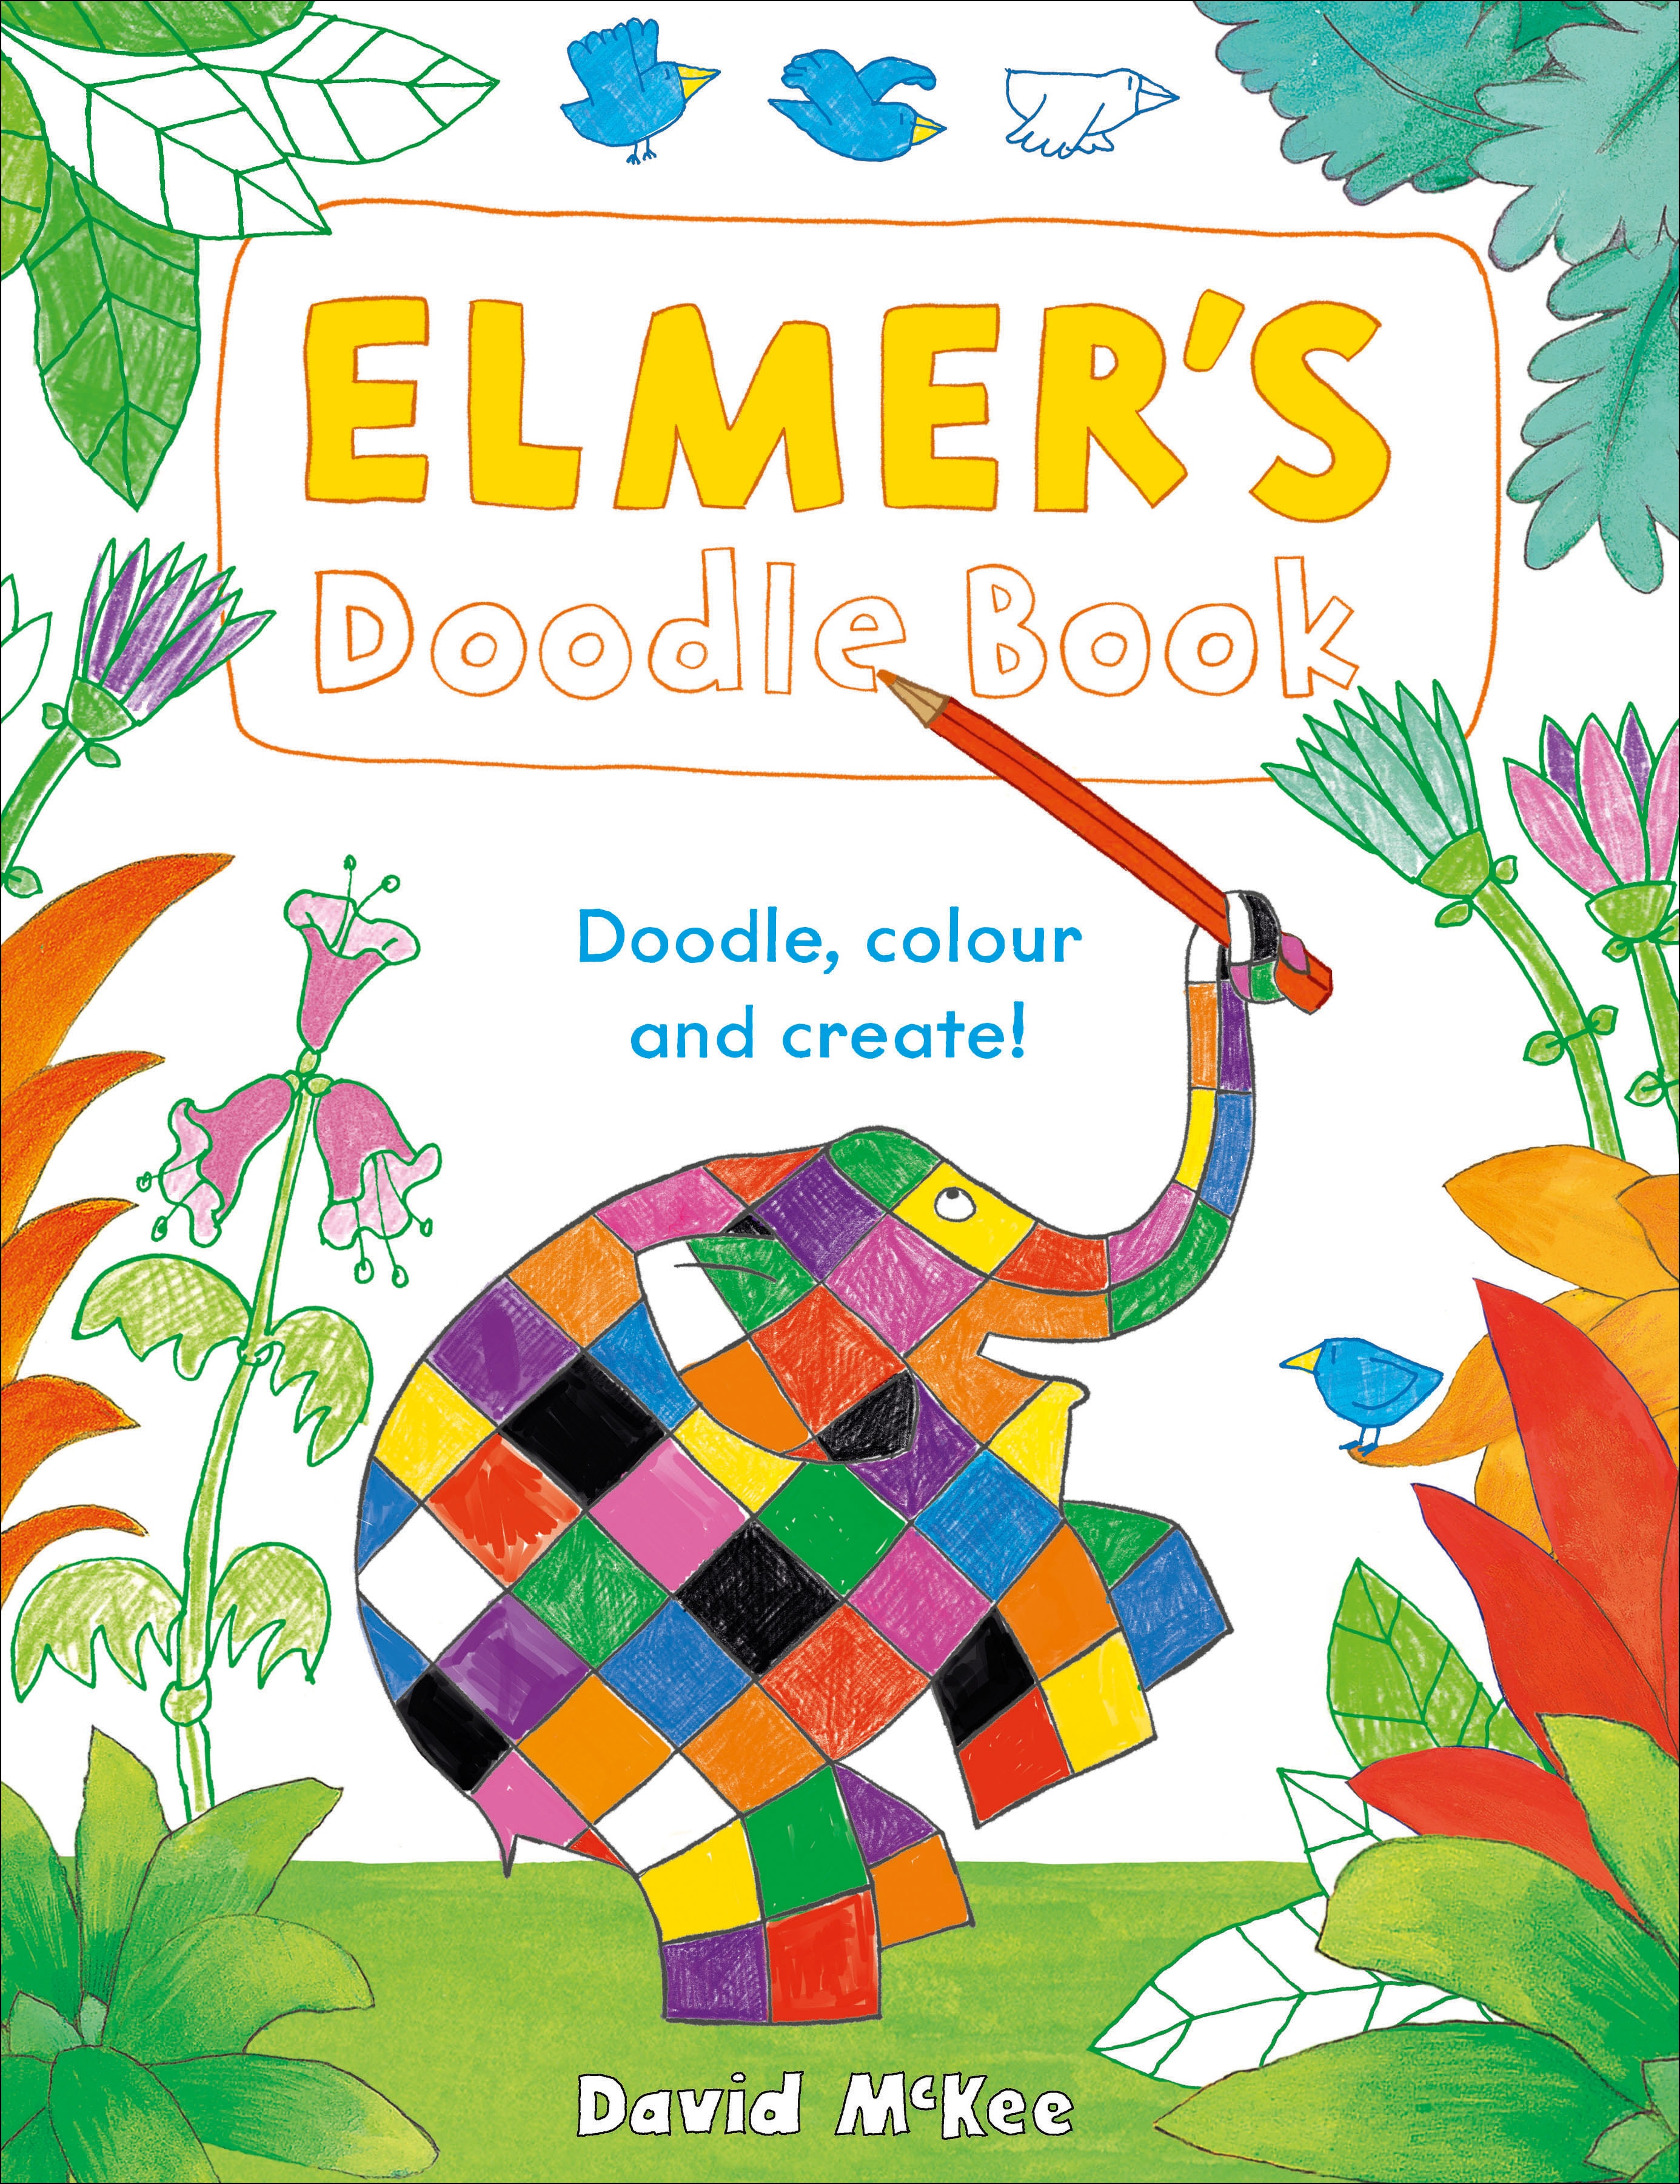 Book “Elmer's Doodle Book” by David McKee — June 6, 2019